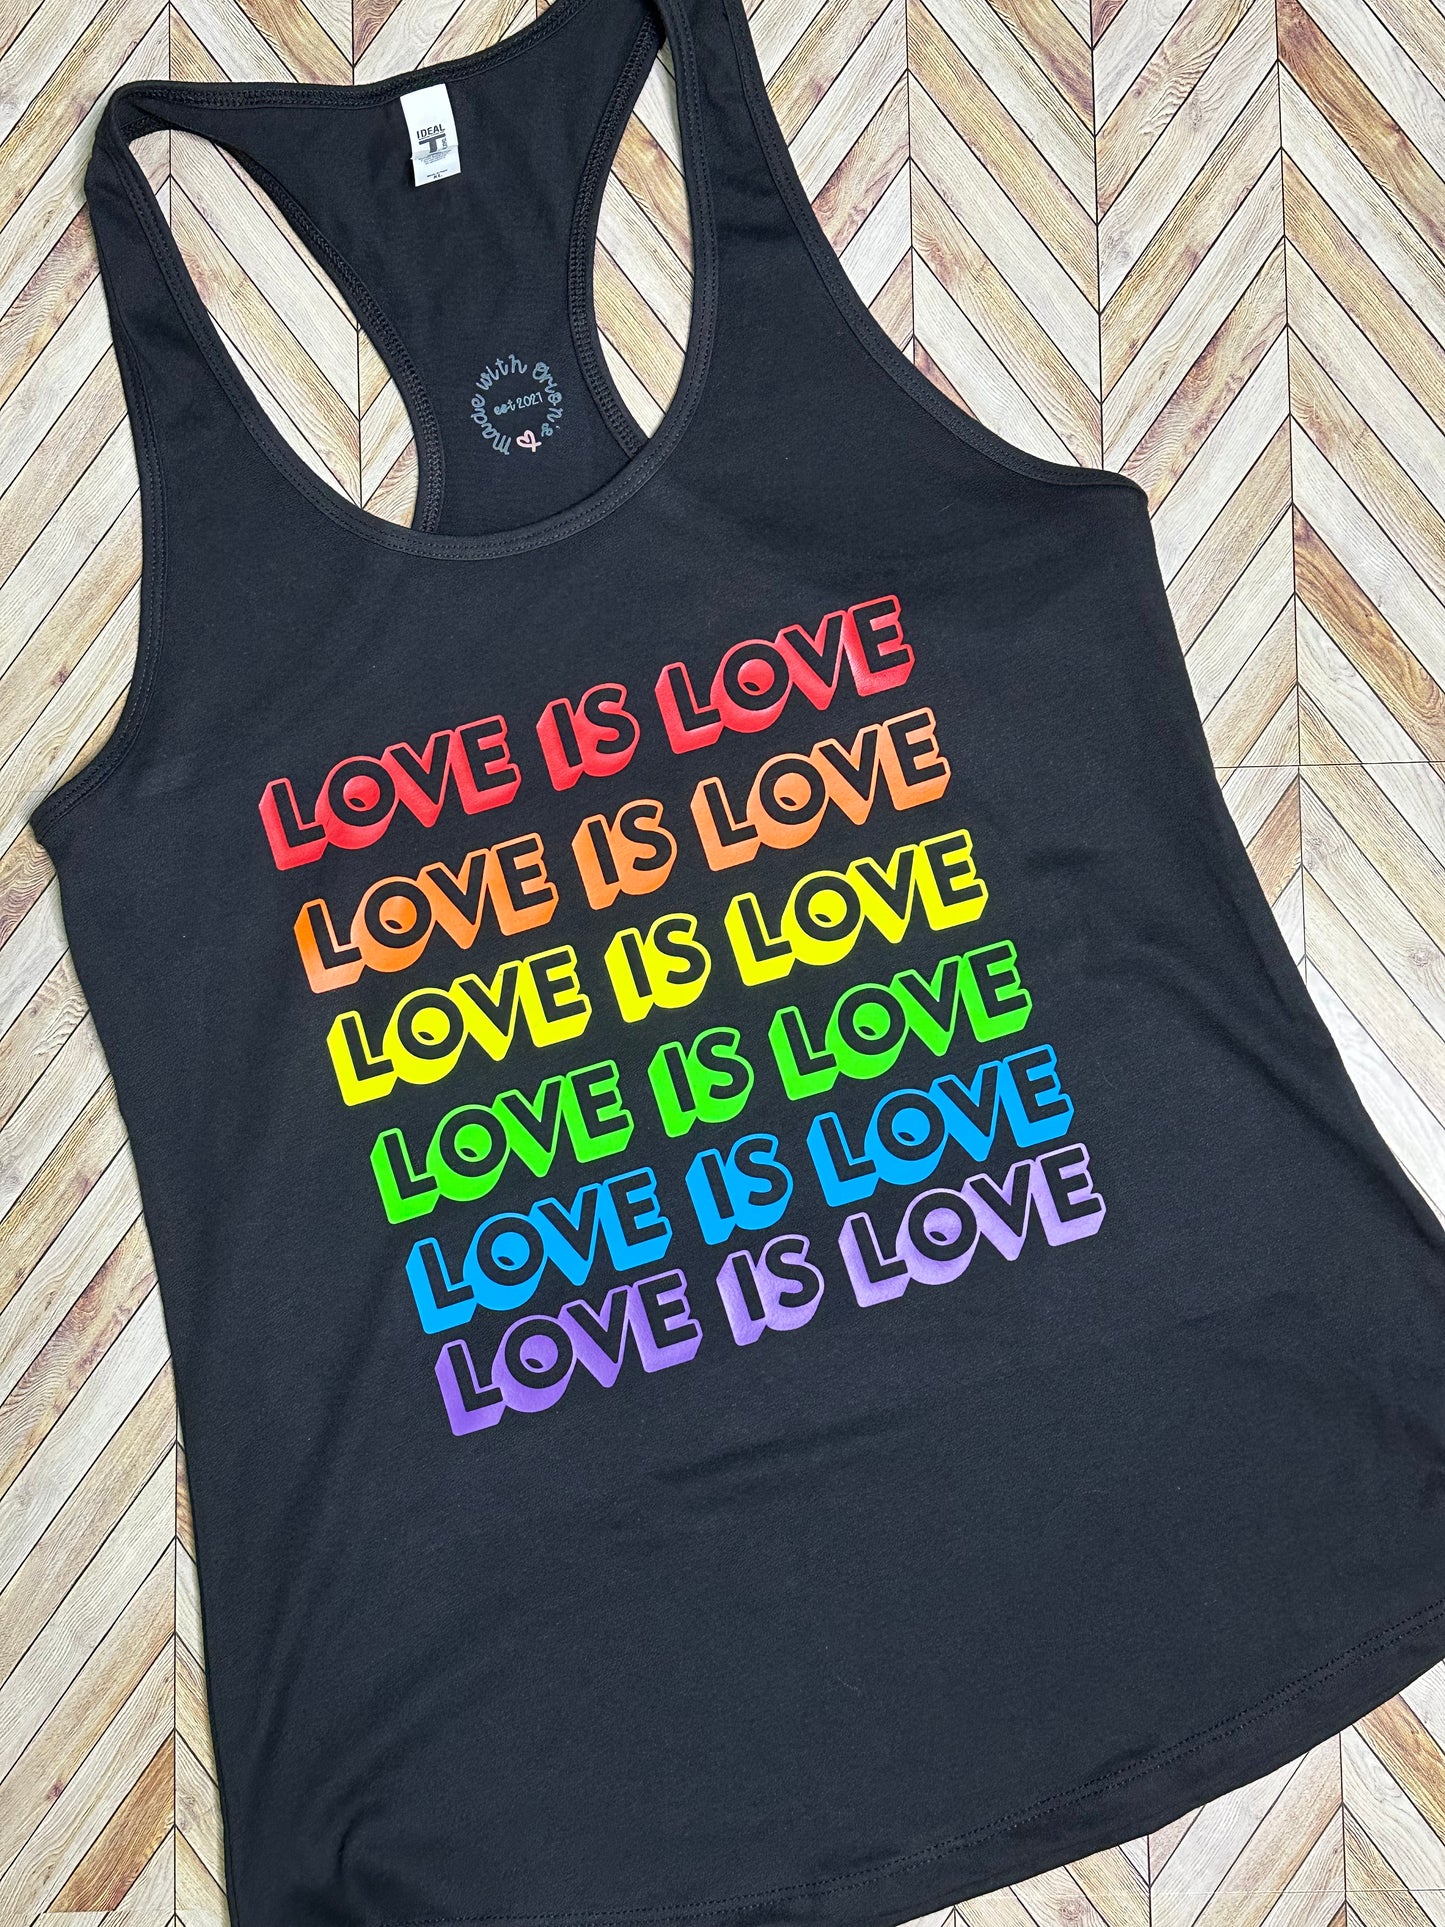 Love is Love shirt